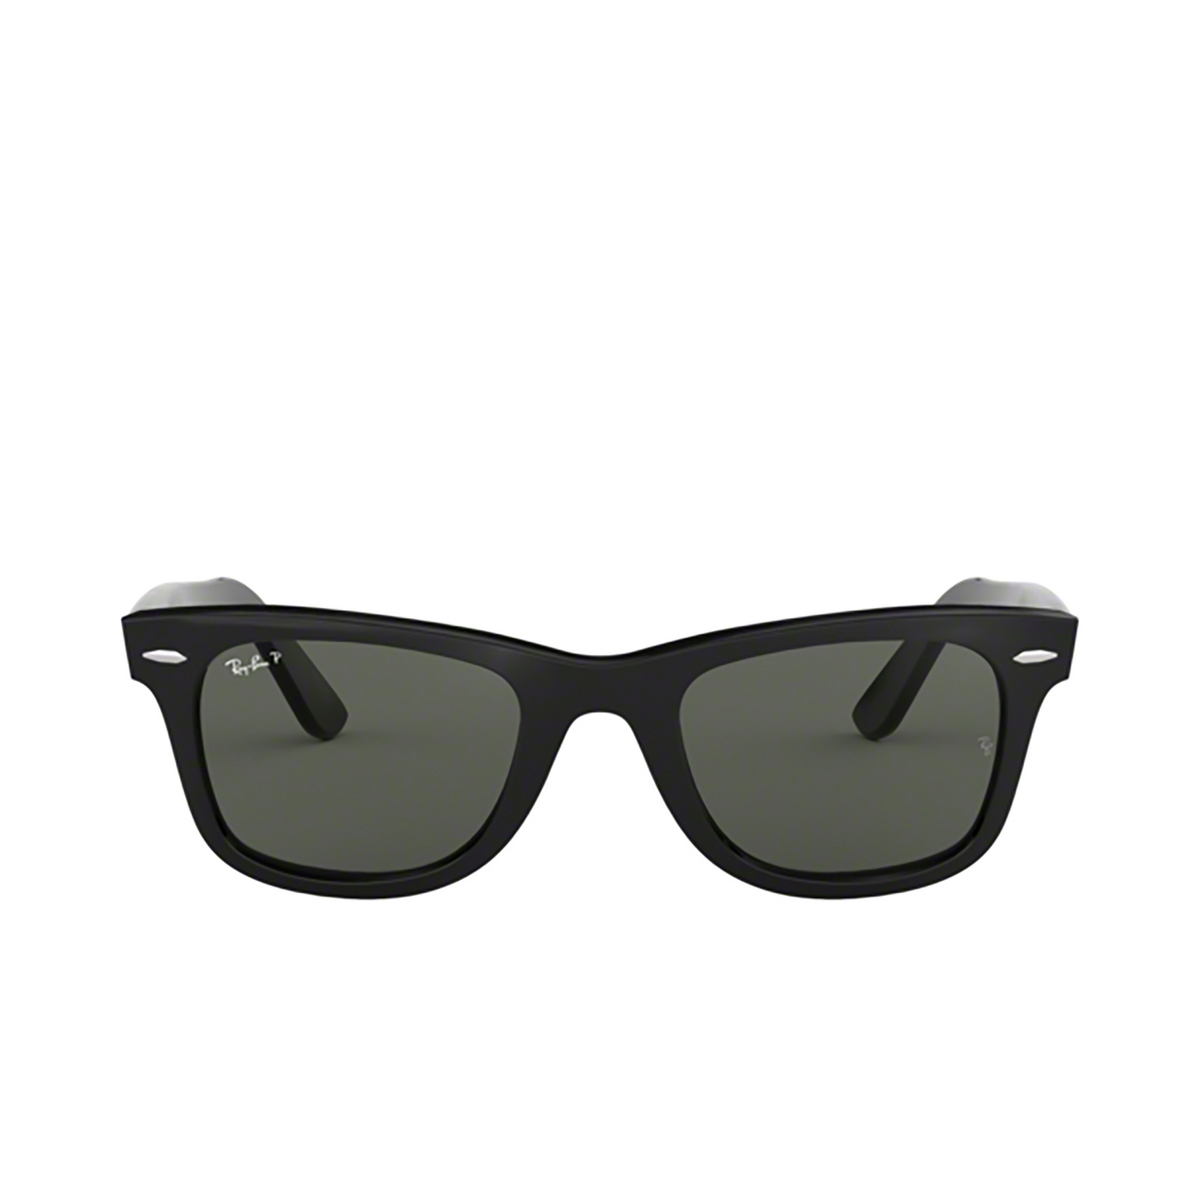 Ray-Ban WAYFARER Sunglasses 901/58 Black - front view